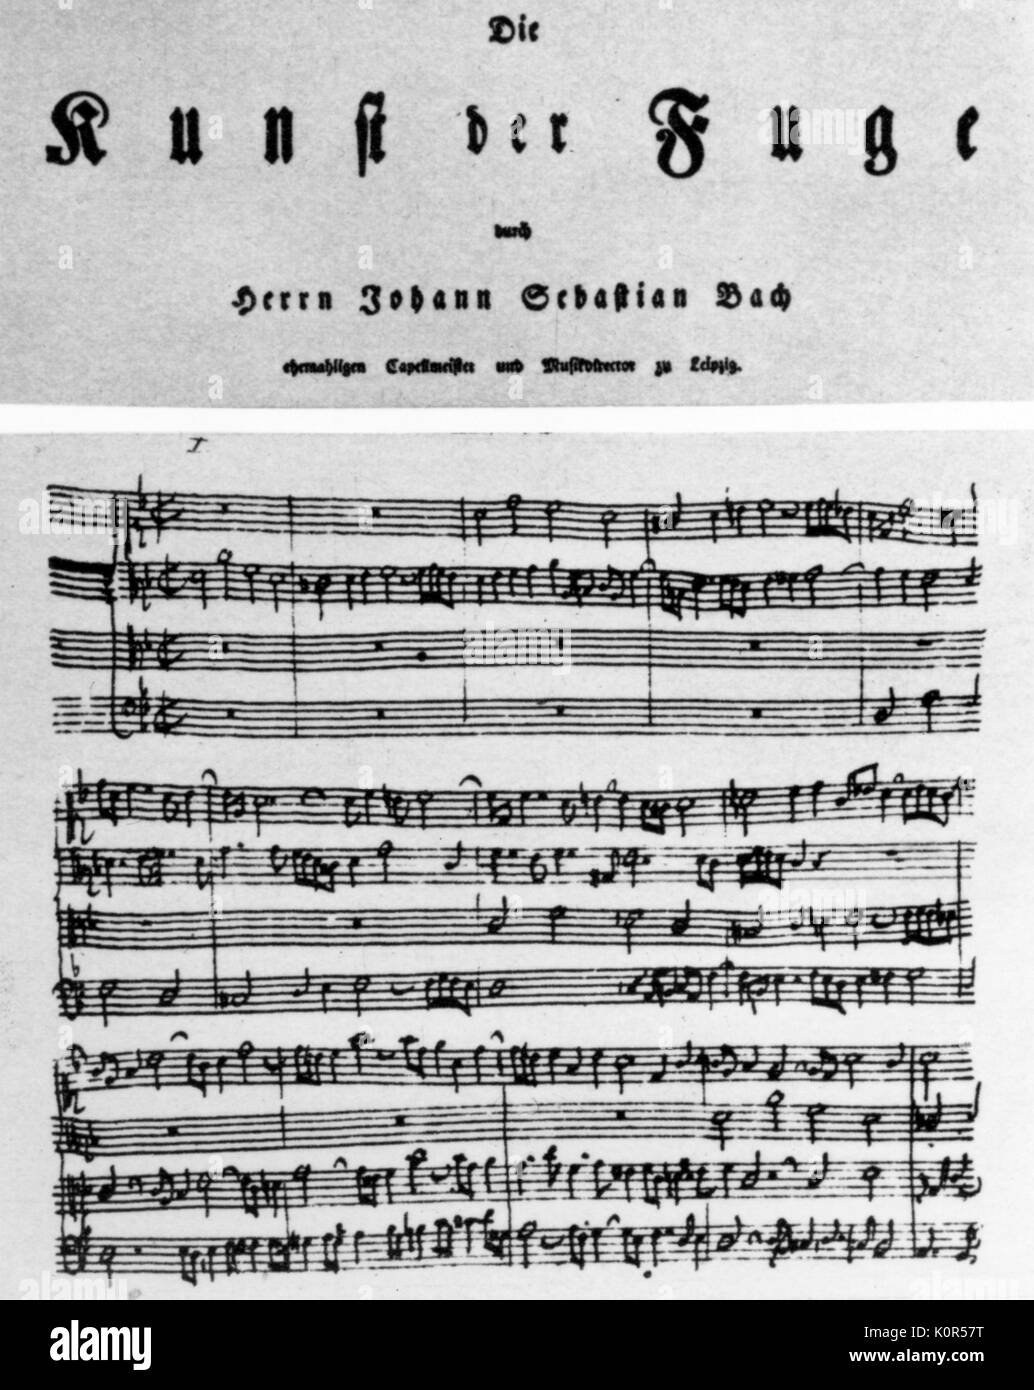 Johann Sebastian Bach - Die Kunst der Fugue, first score page. German composer & organist, 21 March 1685 - 28 July 1750 Stock Photo